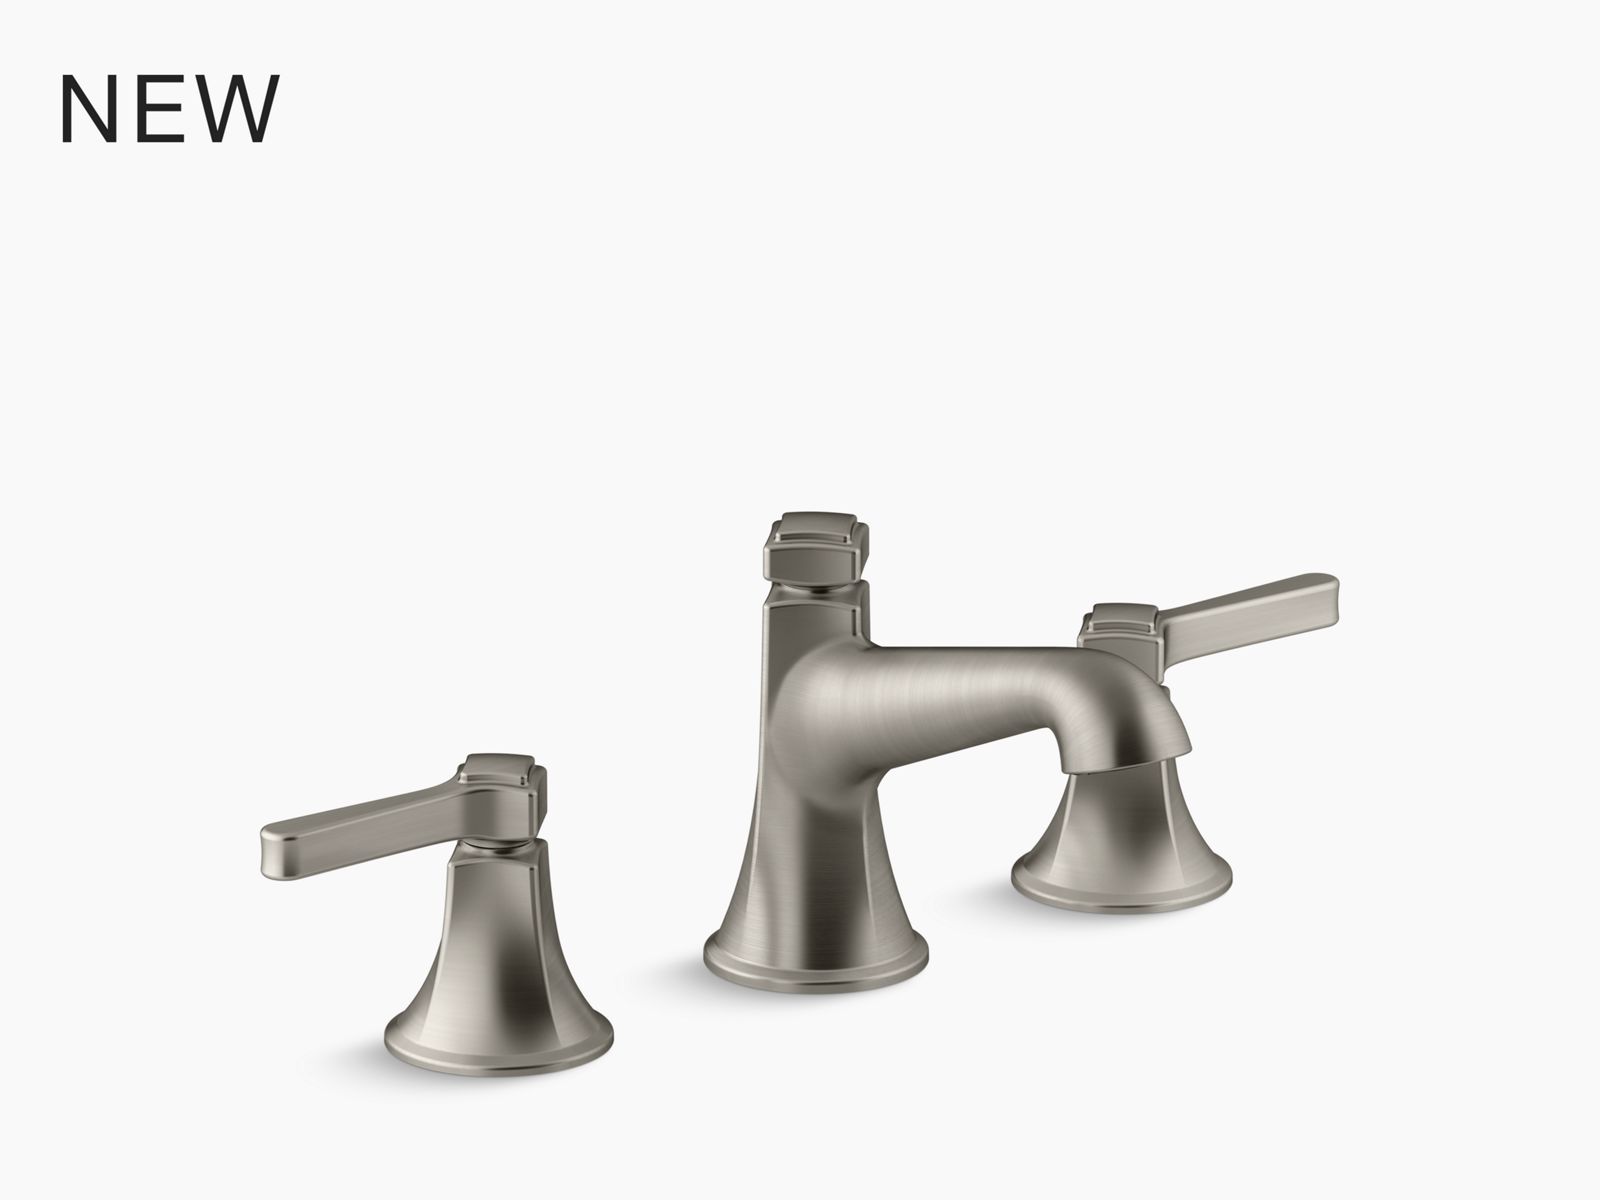 Occasion Widespread Lavatory Faucet- L shape spout with lever handles